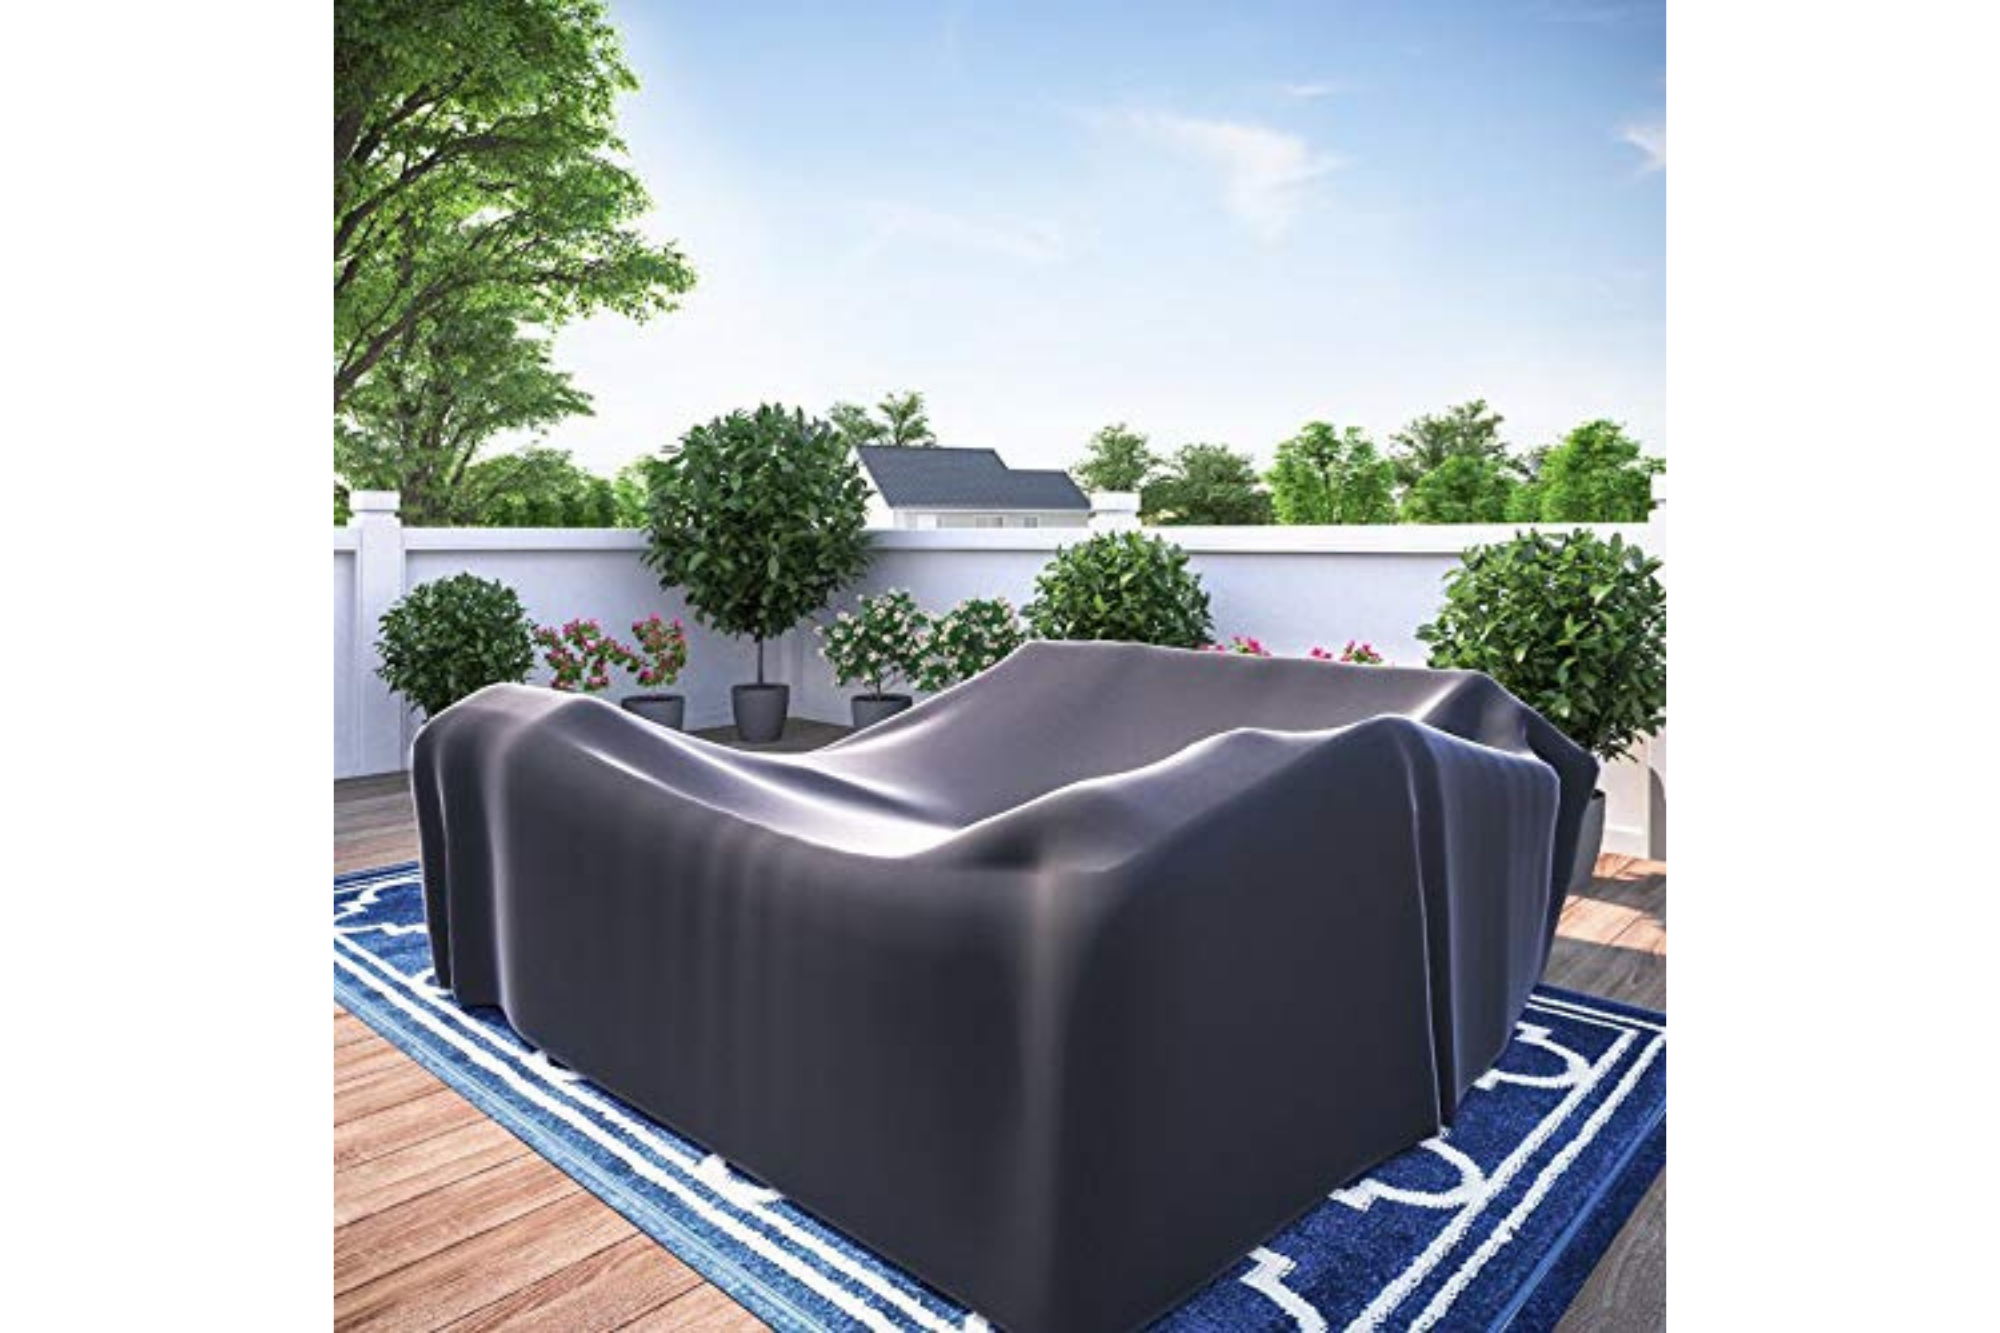 SunHaven 10 Ft x 10 Ft Outdoor Patio Furniture Cover